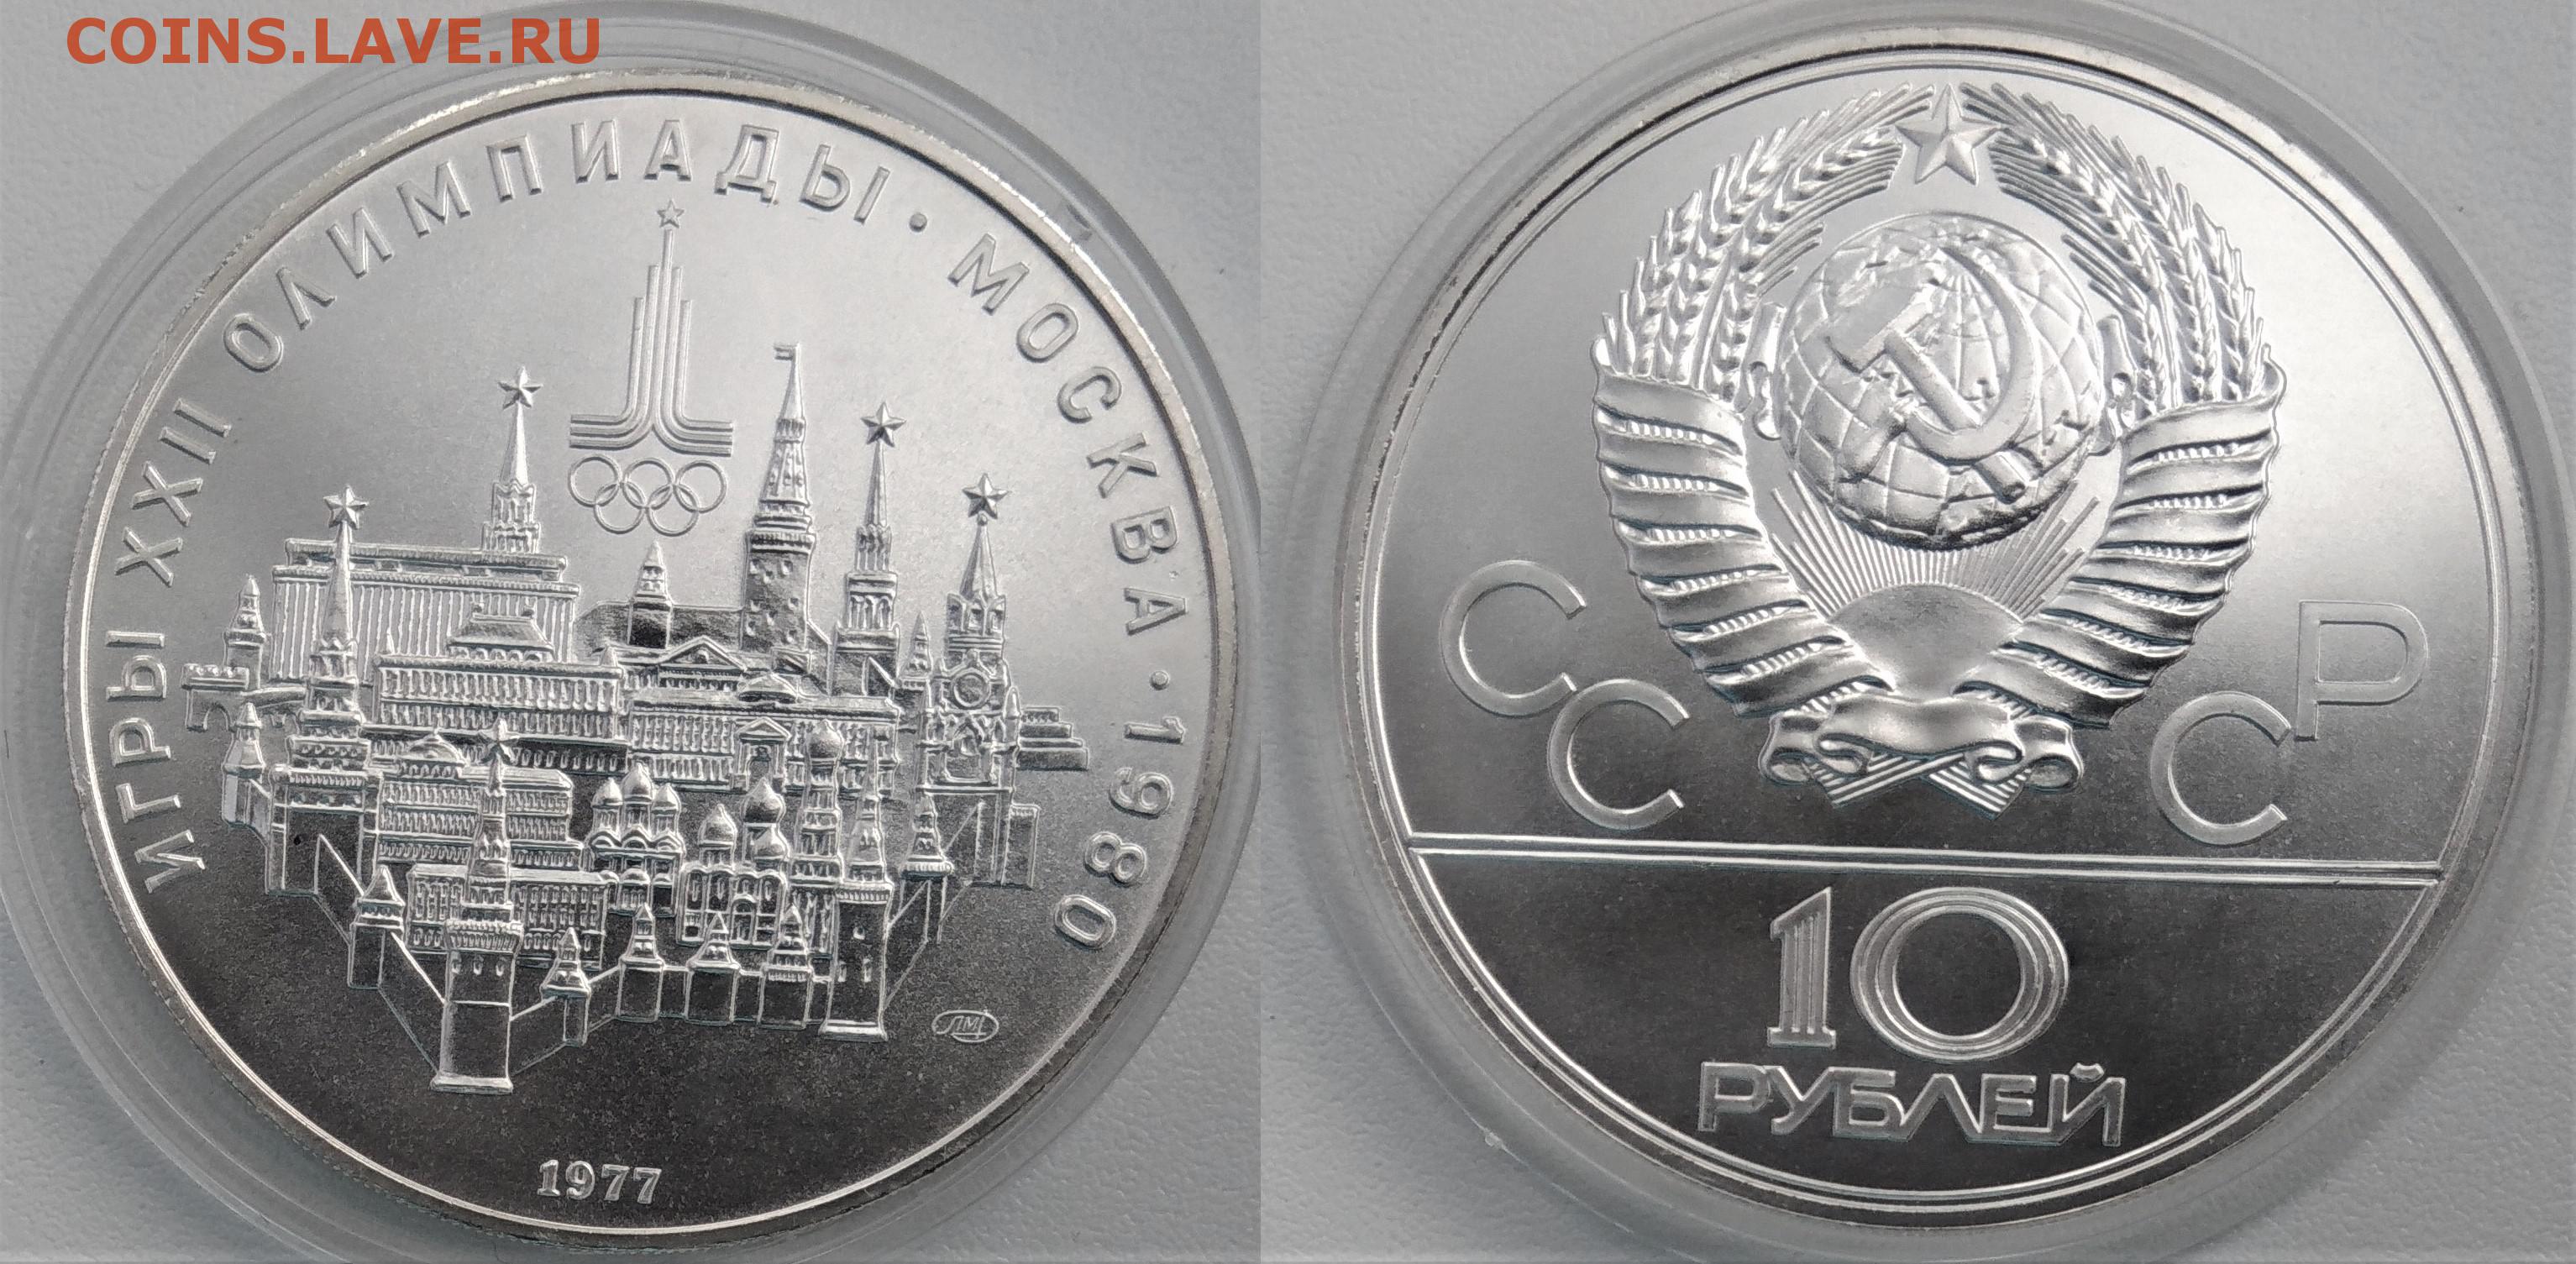 22 200 в рублях. 10 Рублей 1977 Москва. Двести рублей монета. Рубли в Москве.